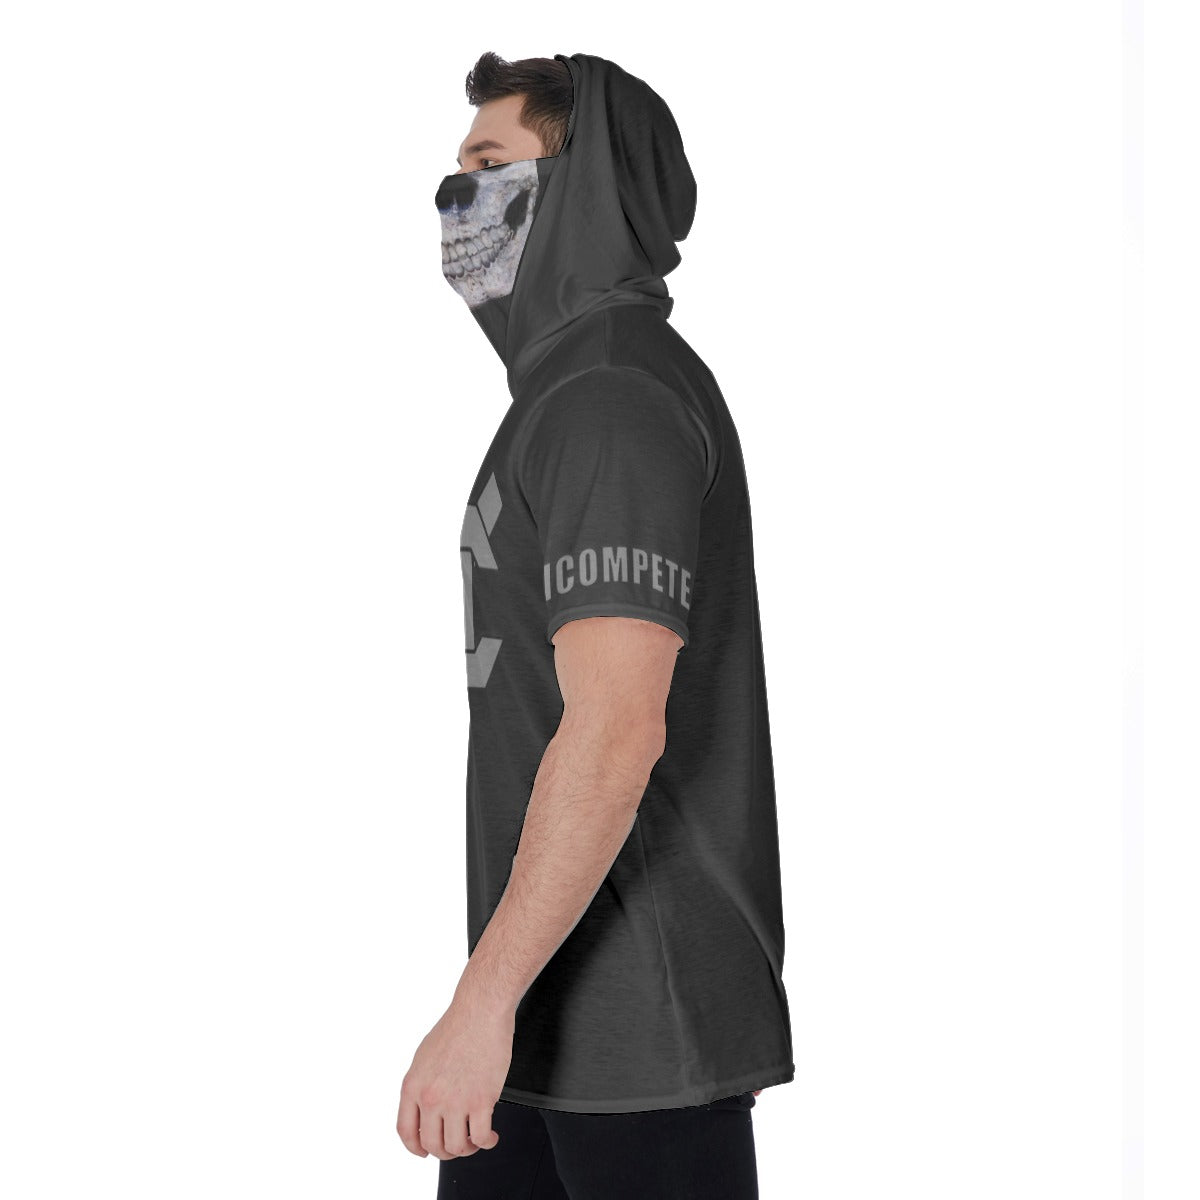 Men's Hooded T's with Built-in Mask -  Skullface